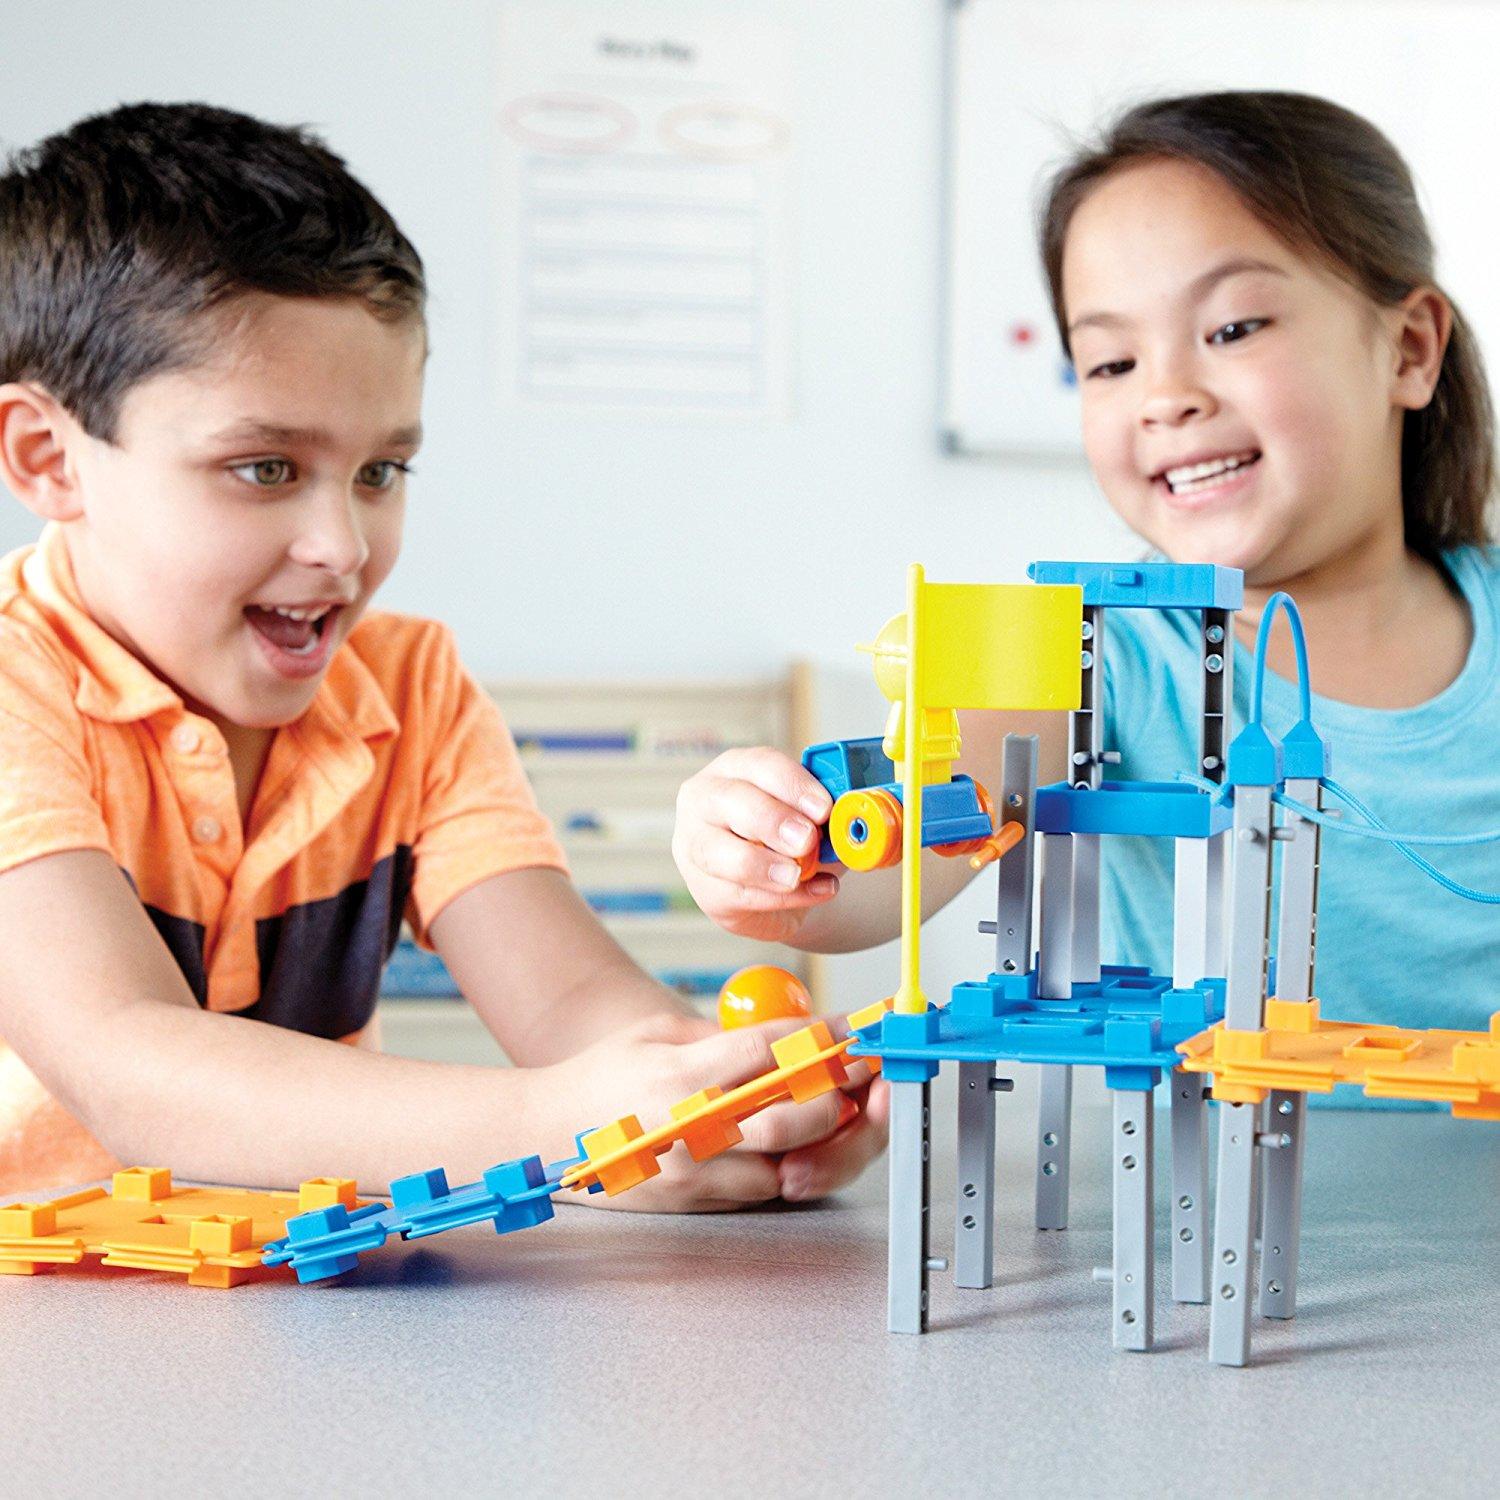 Set STEM - Construieste oraselul PlayLearn Toys